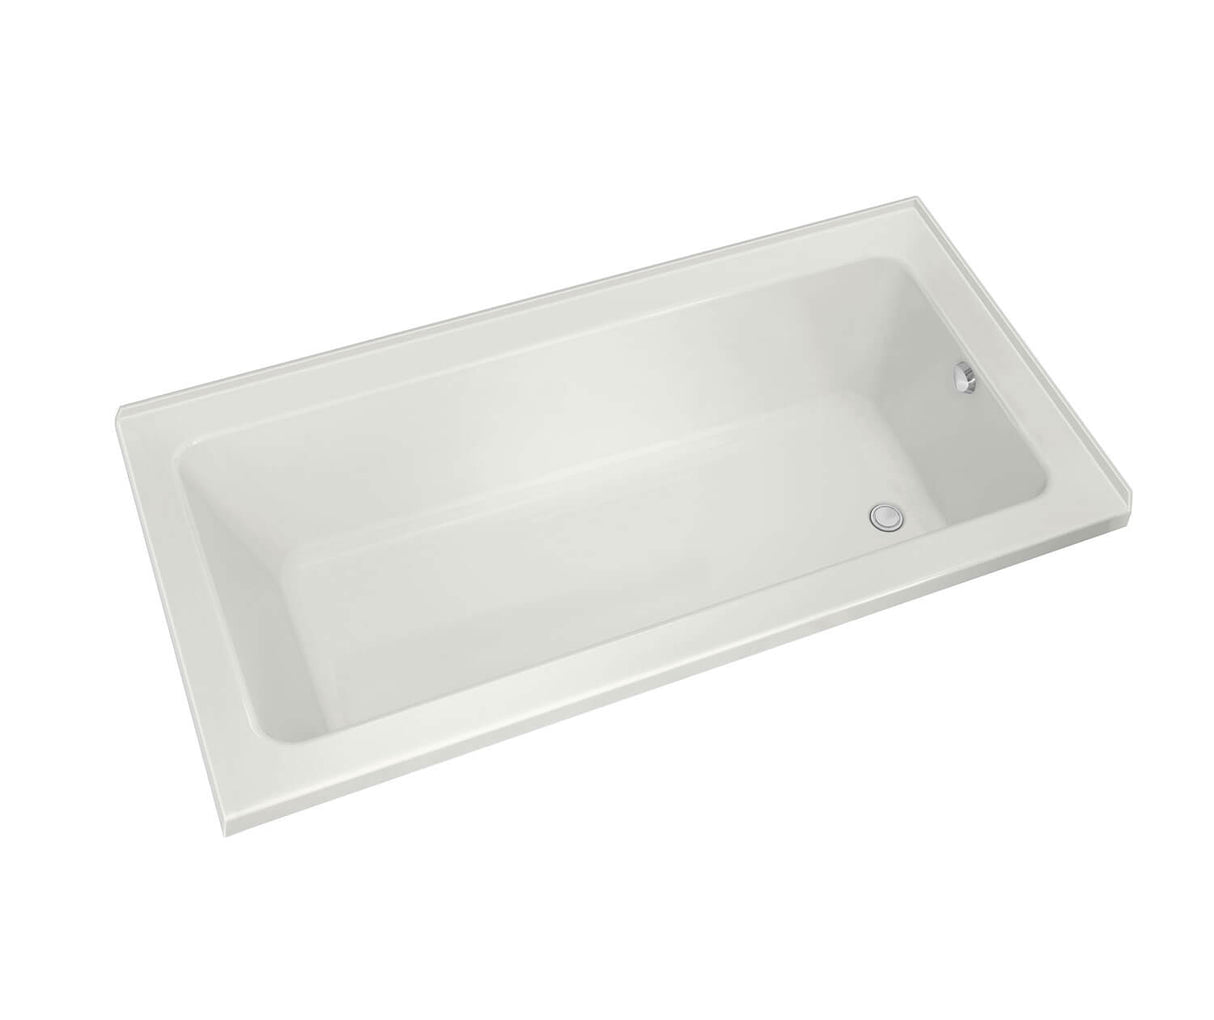 MAAX 106200-R-103-001 Pose 6030 IF Acrylic Corner Right Right-Hand Drain Aeroeffect Bathtub in White